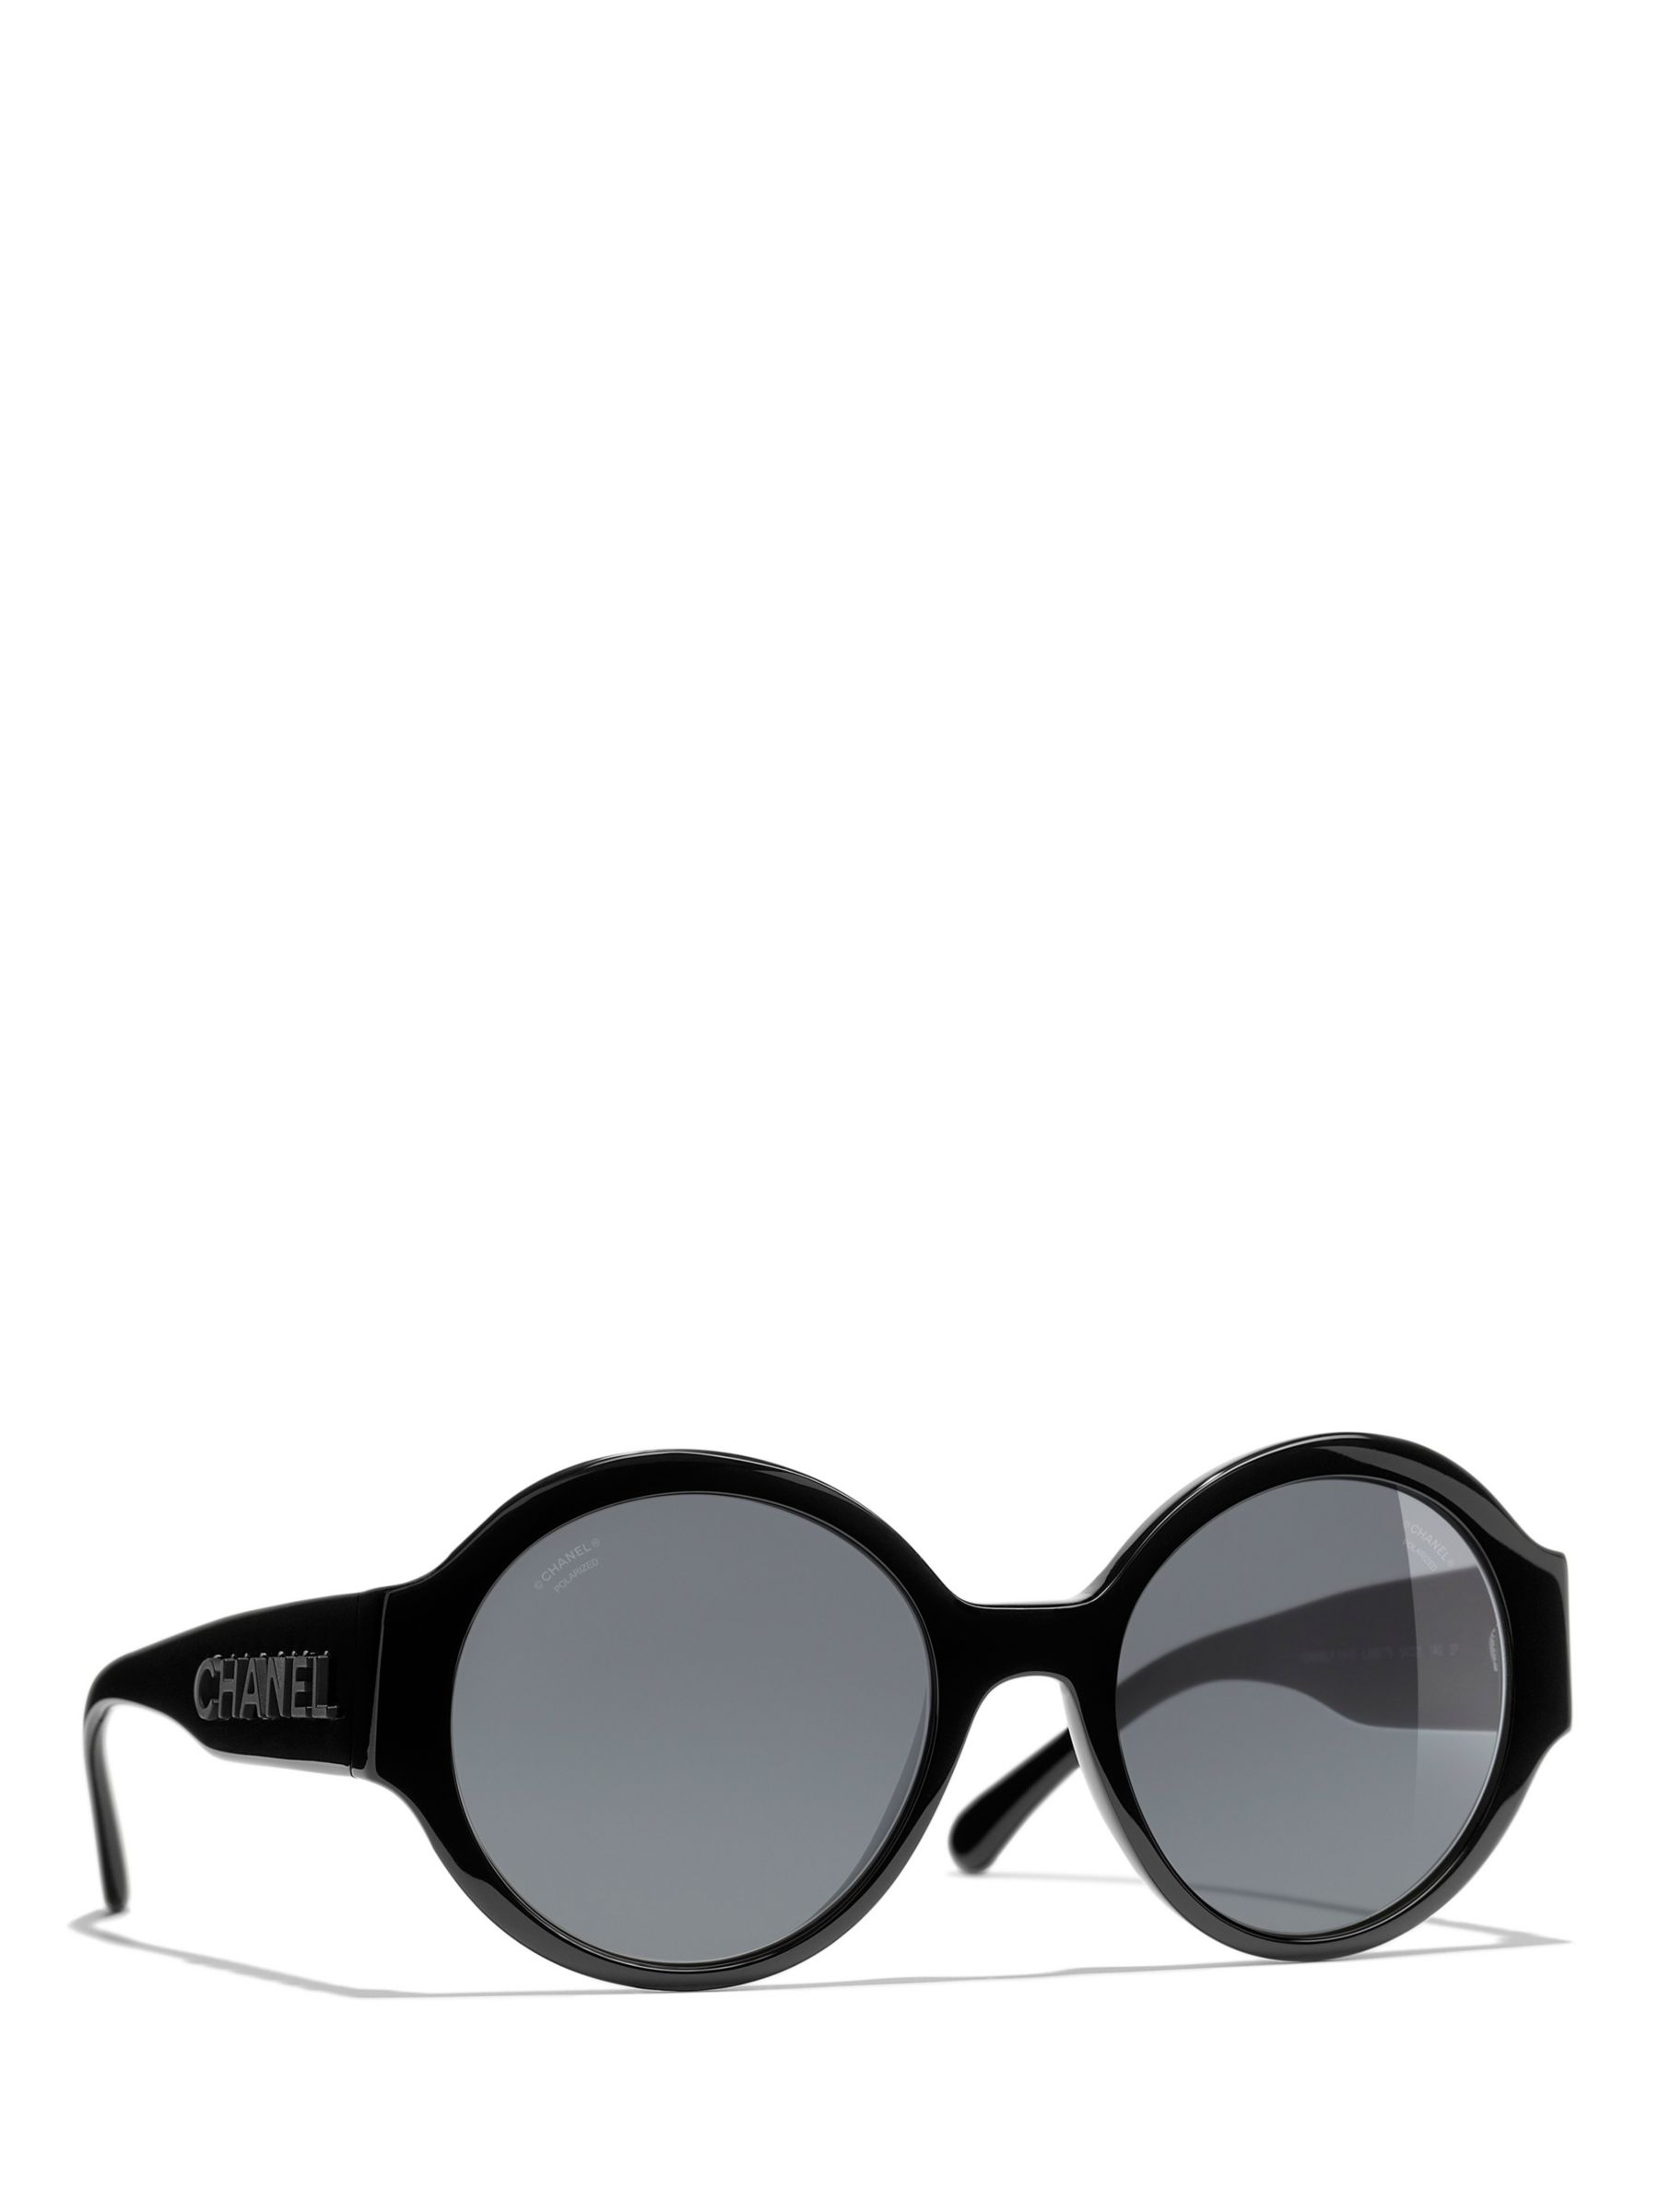 Chanel Sunglasses 5410